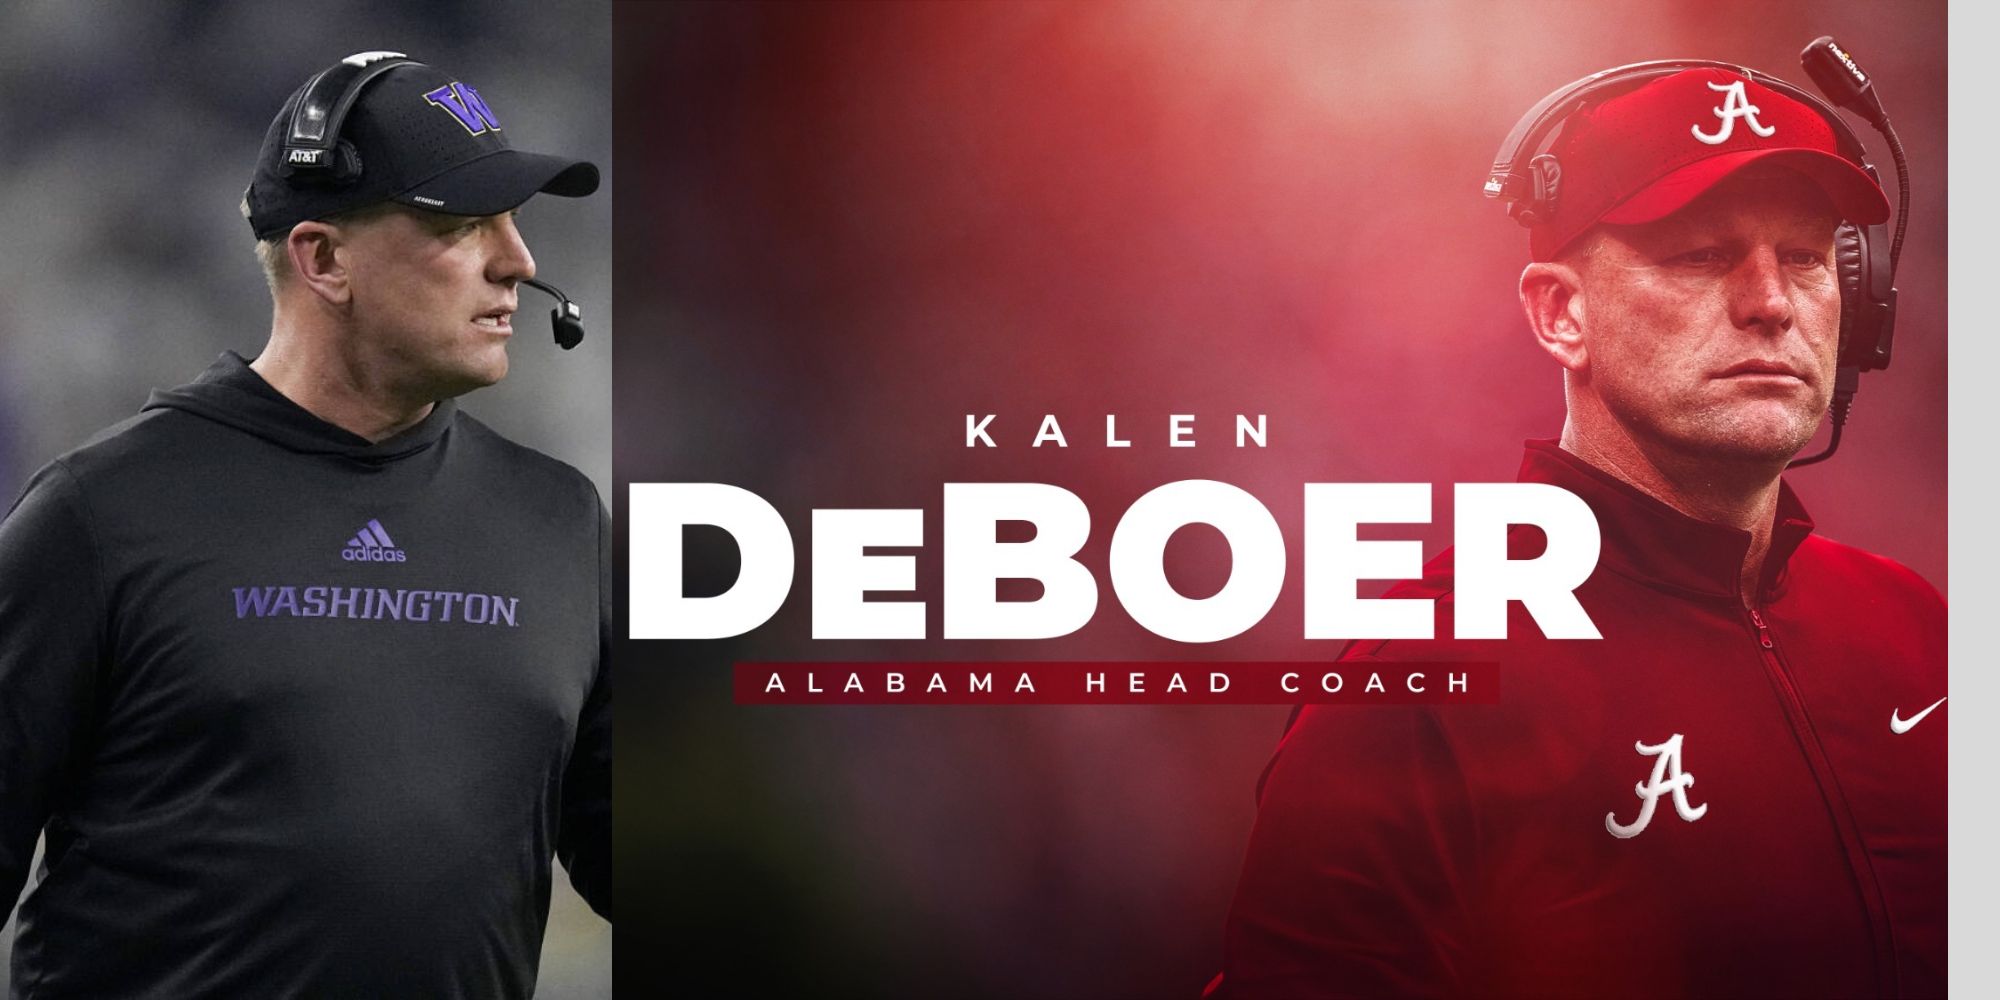 Why Did Kalen Deboer Leave Washington for Alabama? Answered